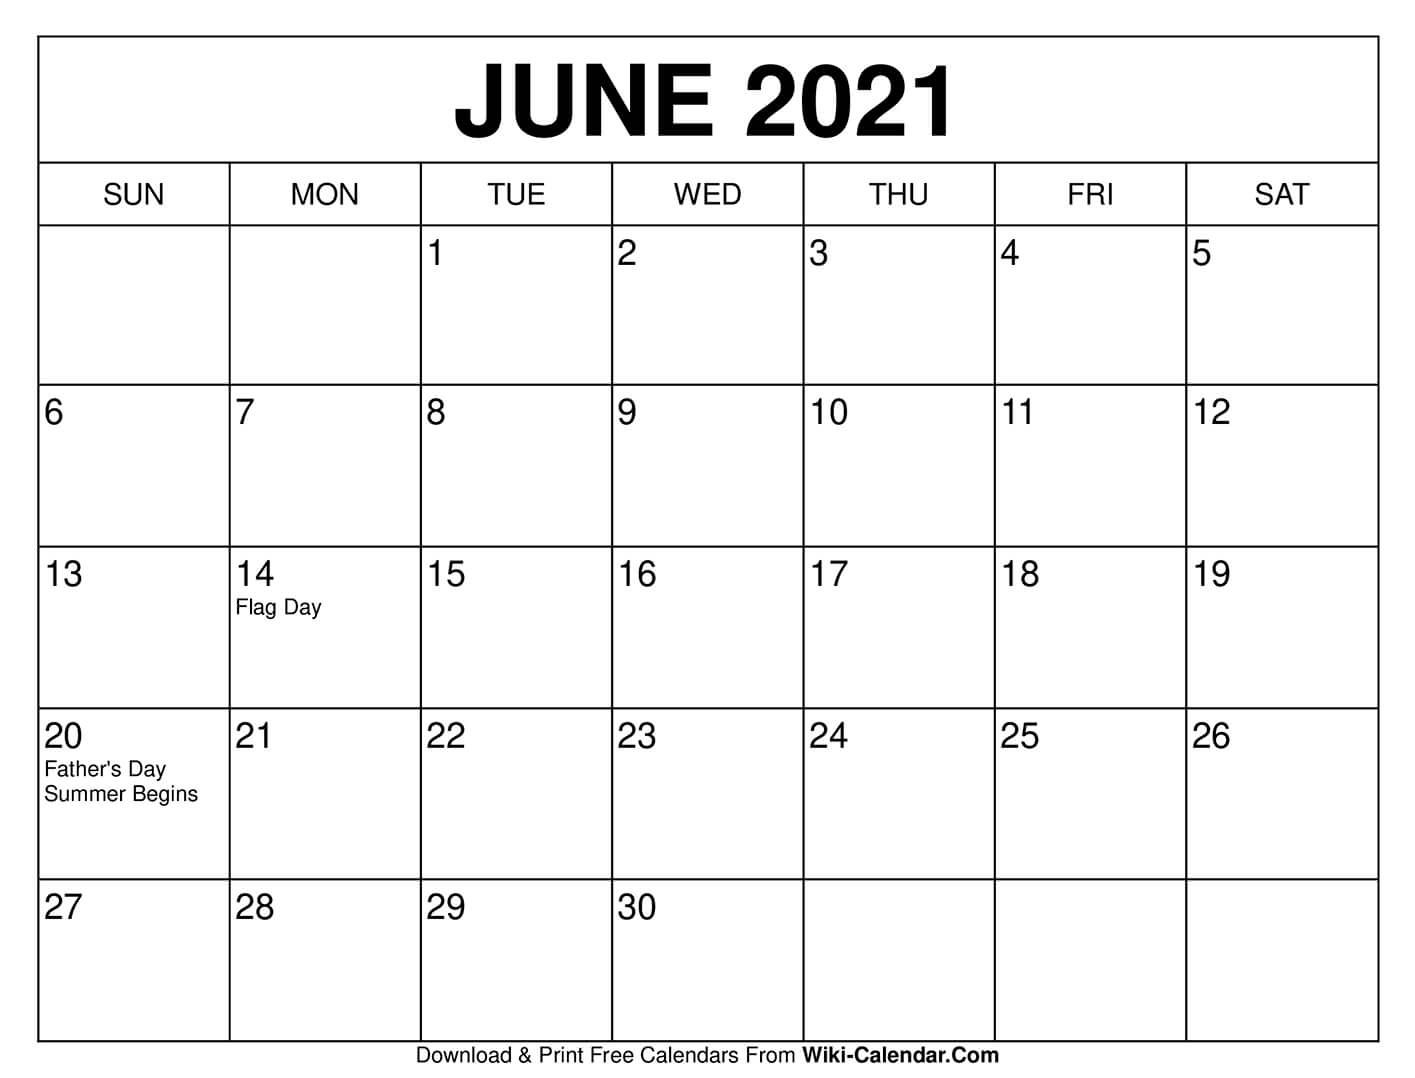 June 2021 Calendar In 2020 | Calendar Printables, Calendar